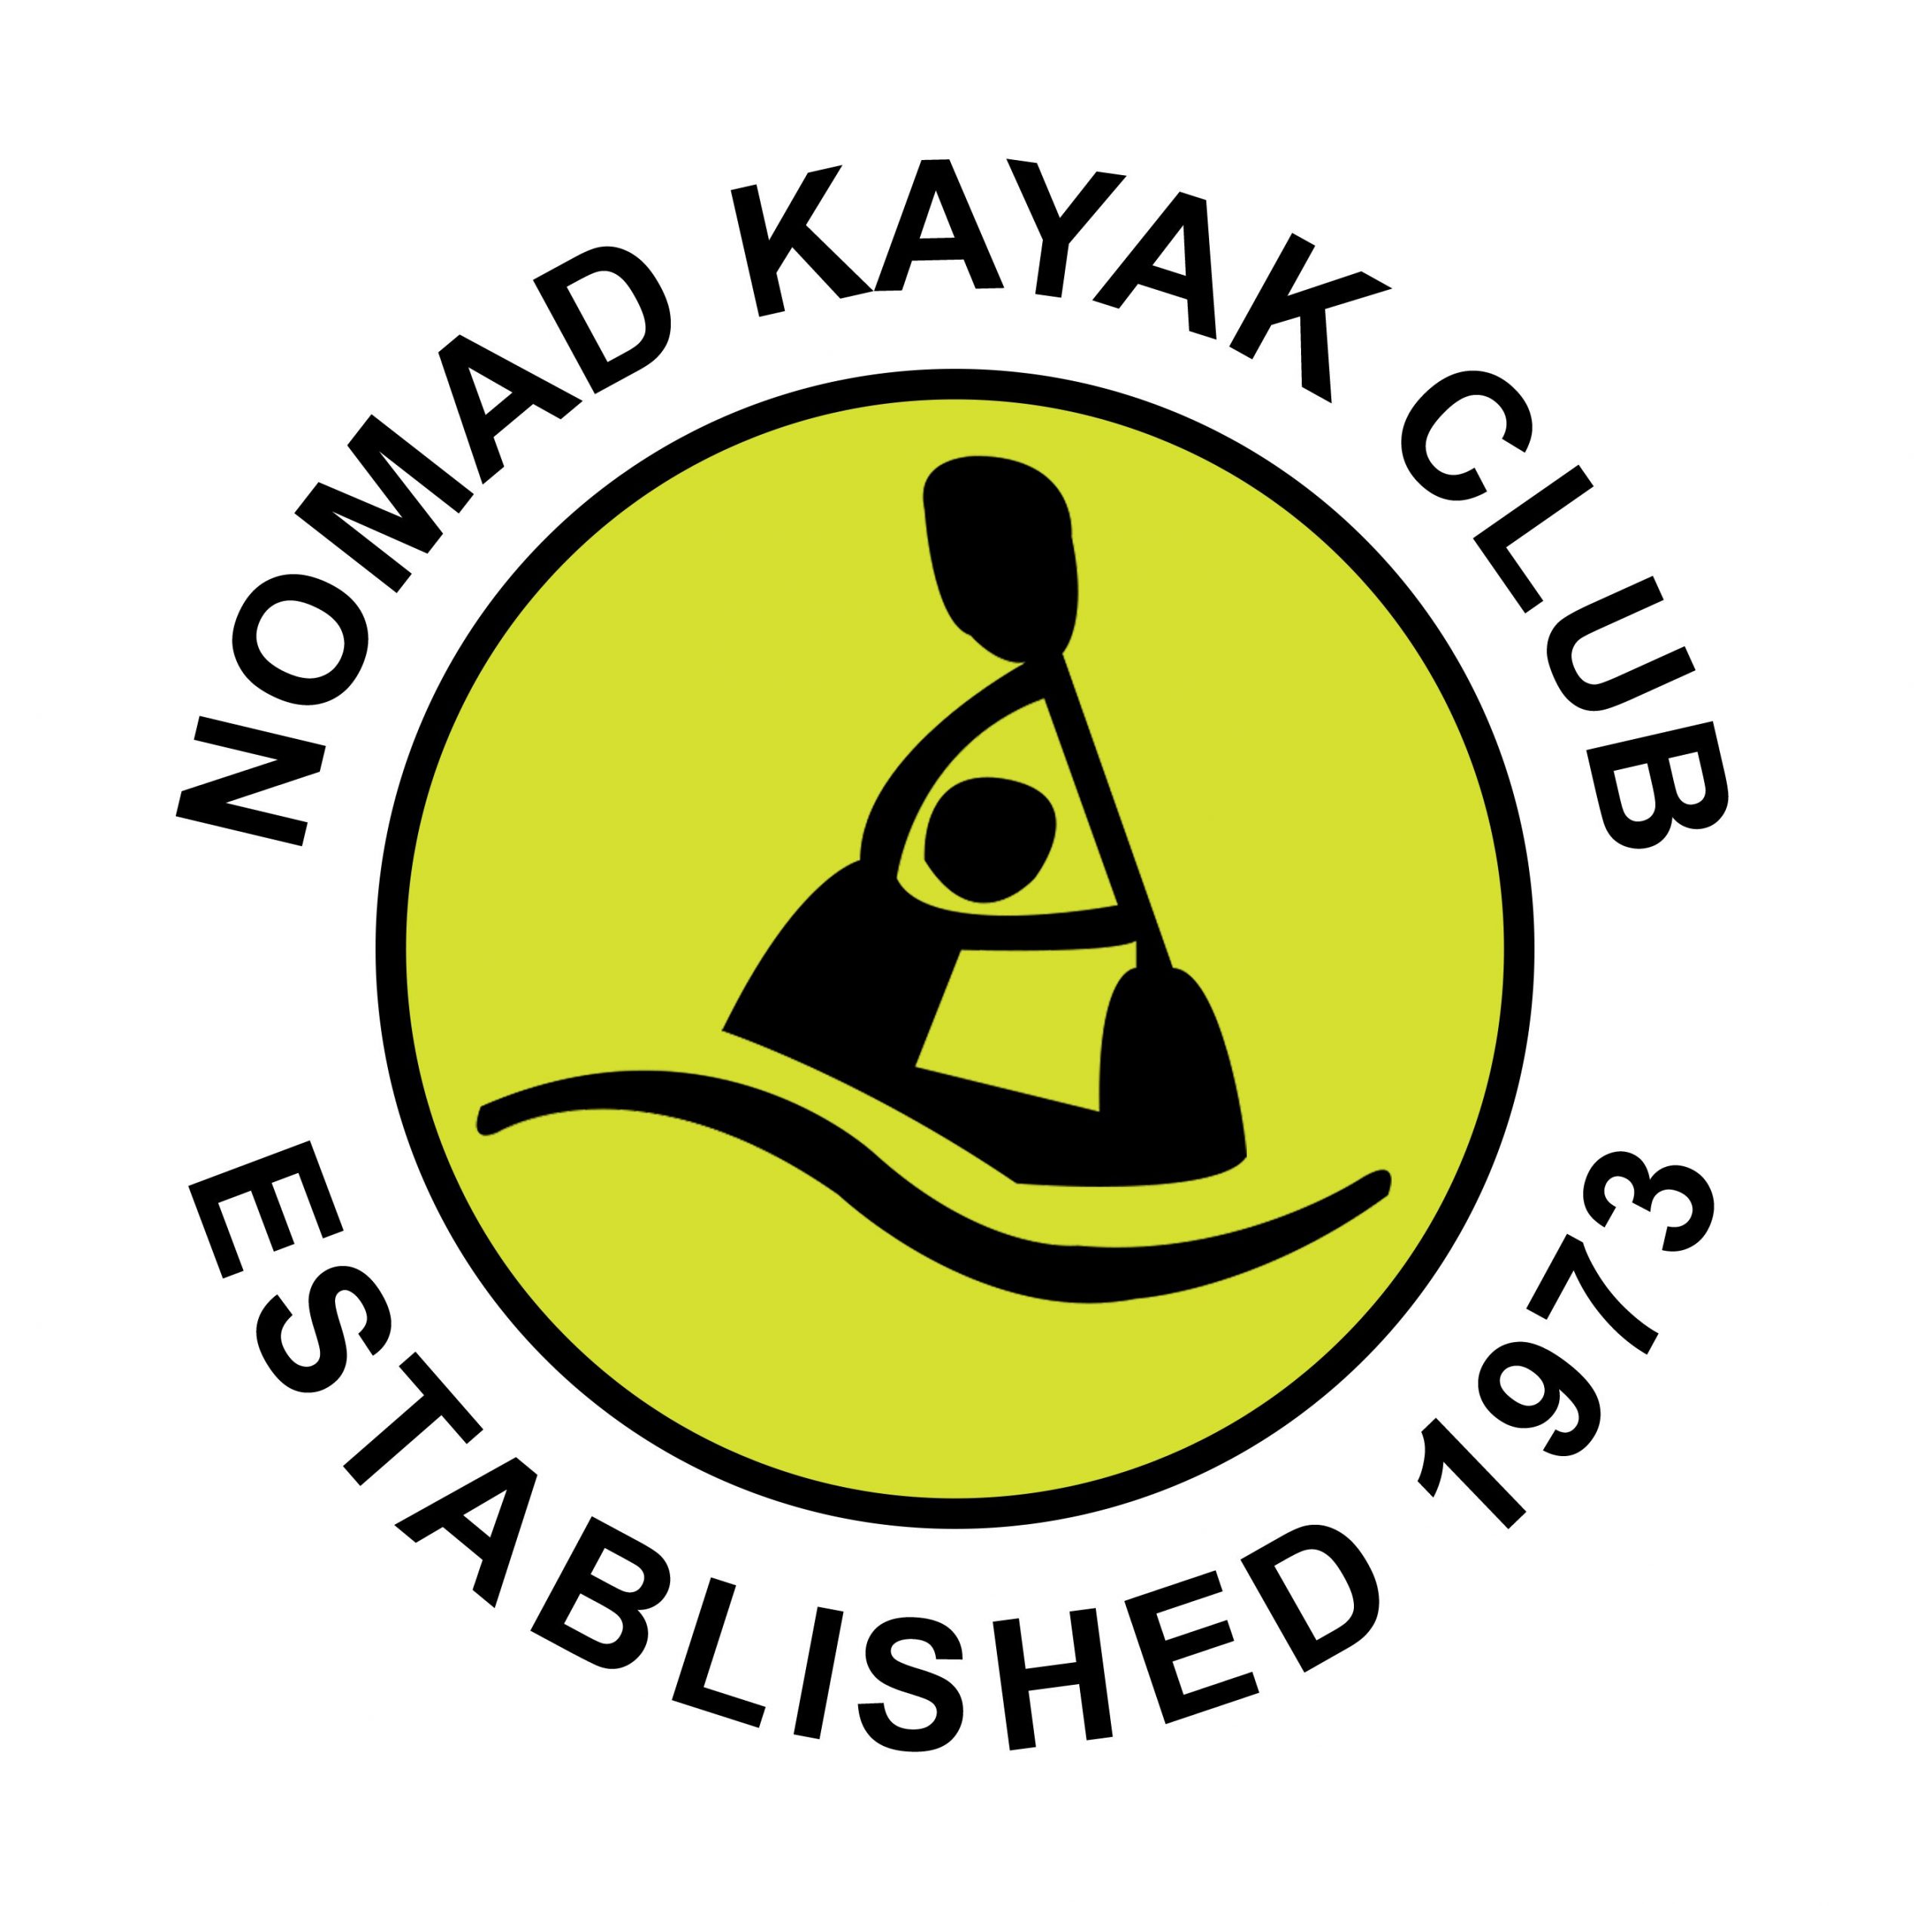 IMPORTANT NOTICE – Impact of Coronavirus (Covid-19) on Nomad Kayak Club Activities